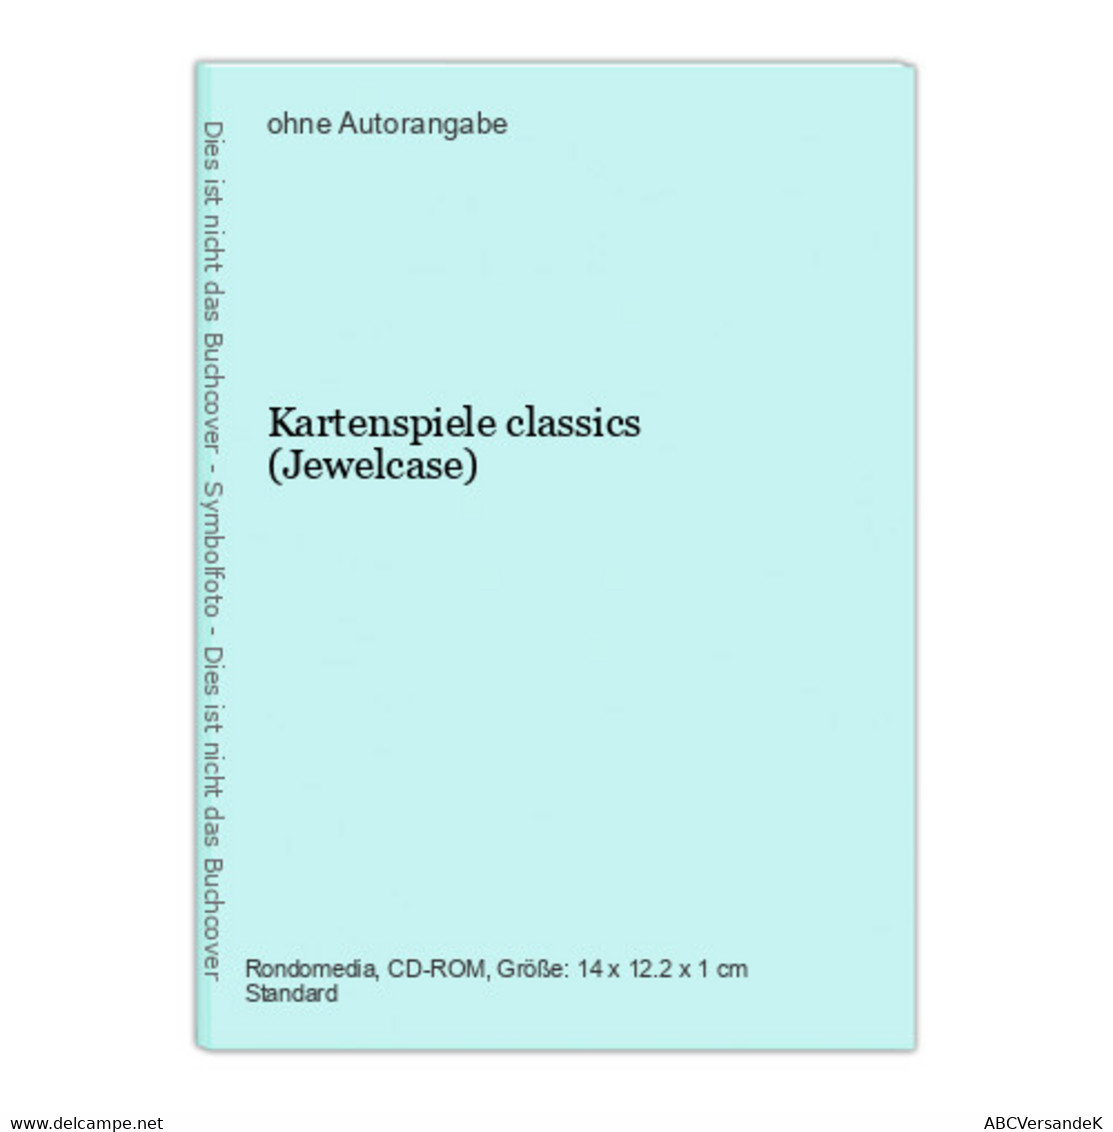 Kartenspiele Classics (Jewelcase) - CD